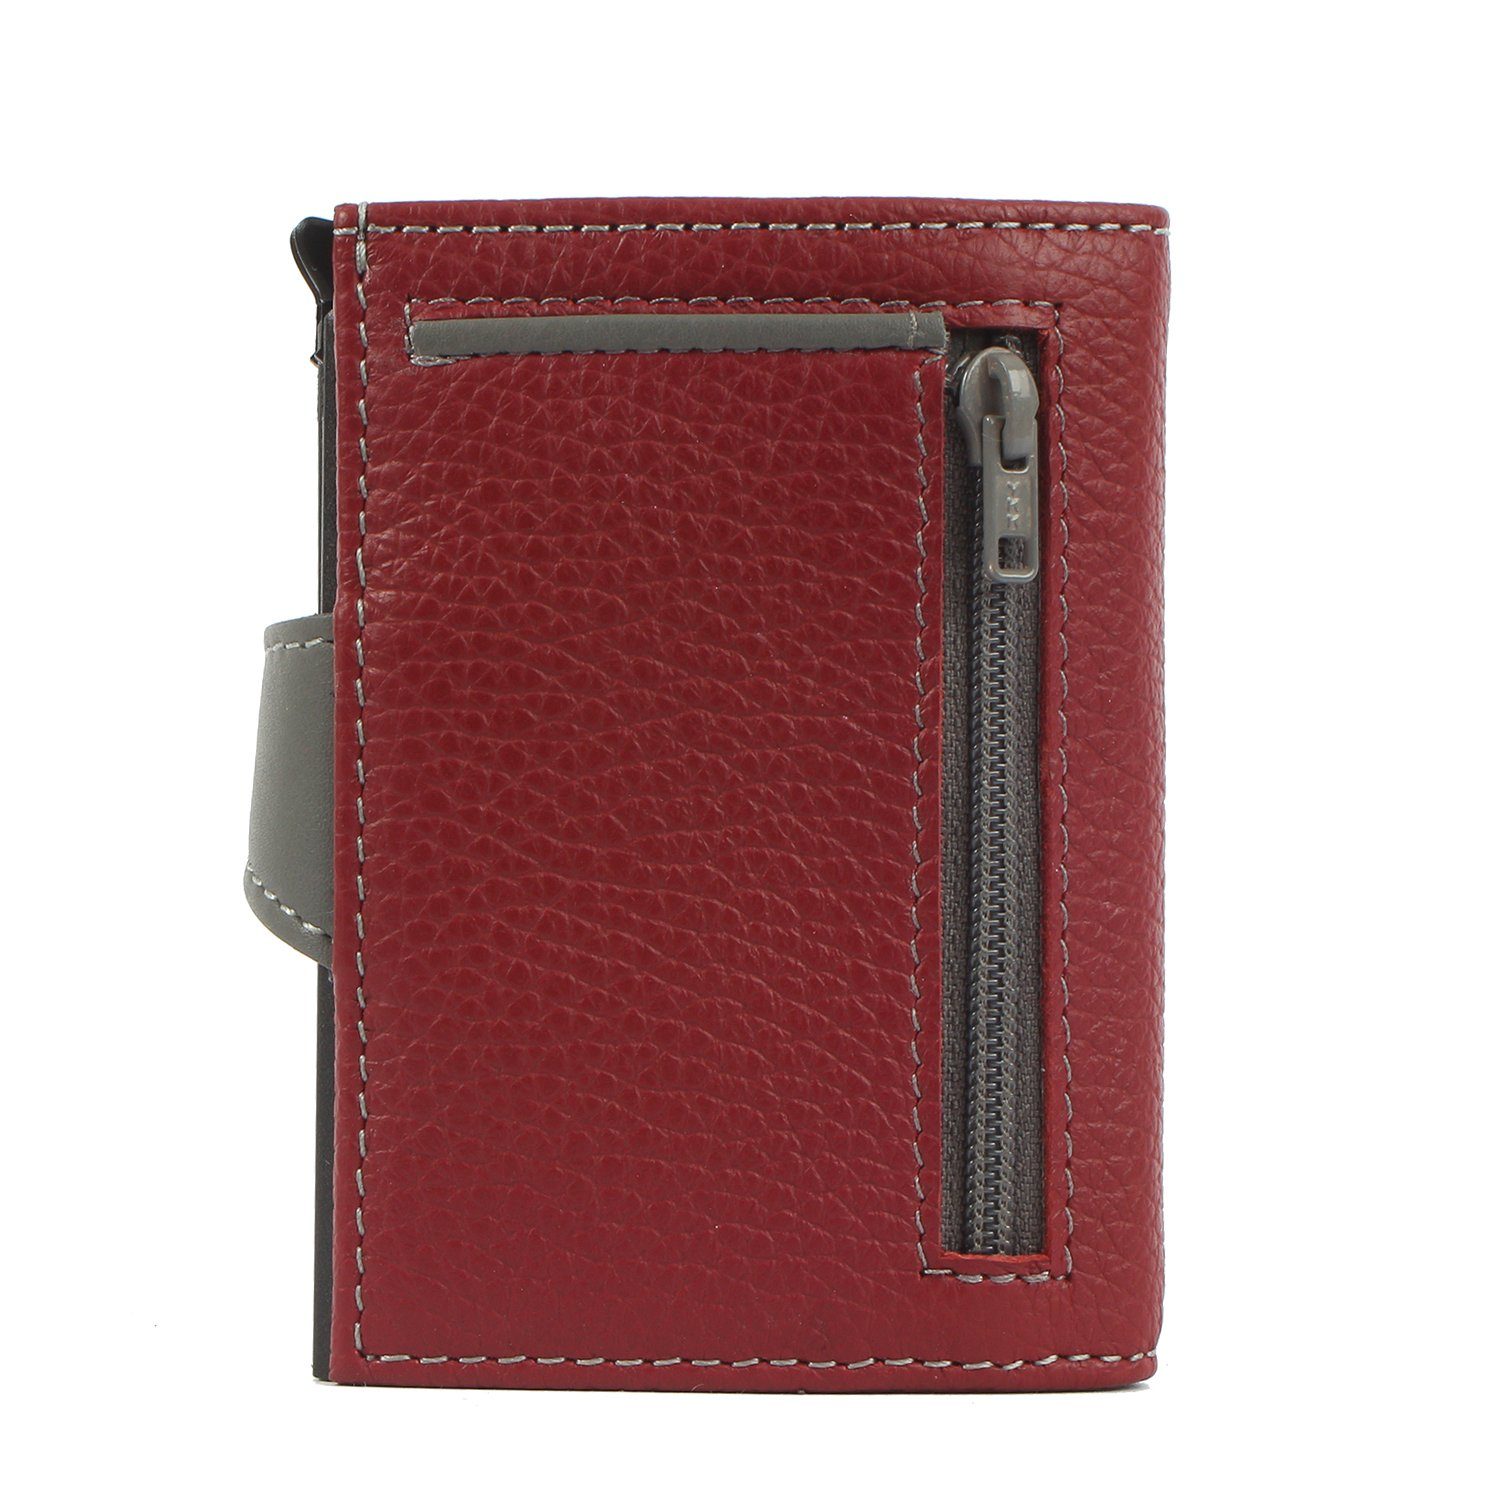 karminrot aus Mini noonyu Margelisch leather, Kreditkartenbörse double Upcycling Leder RFID Geldbörse